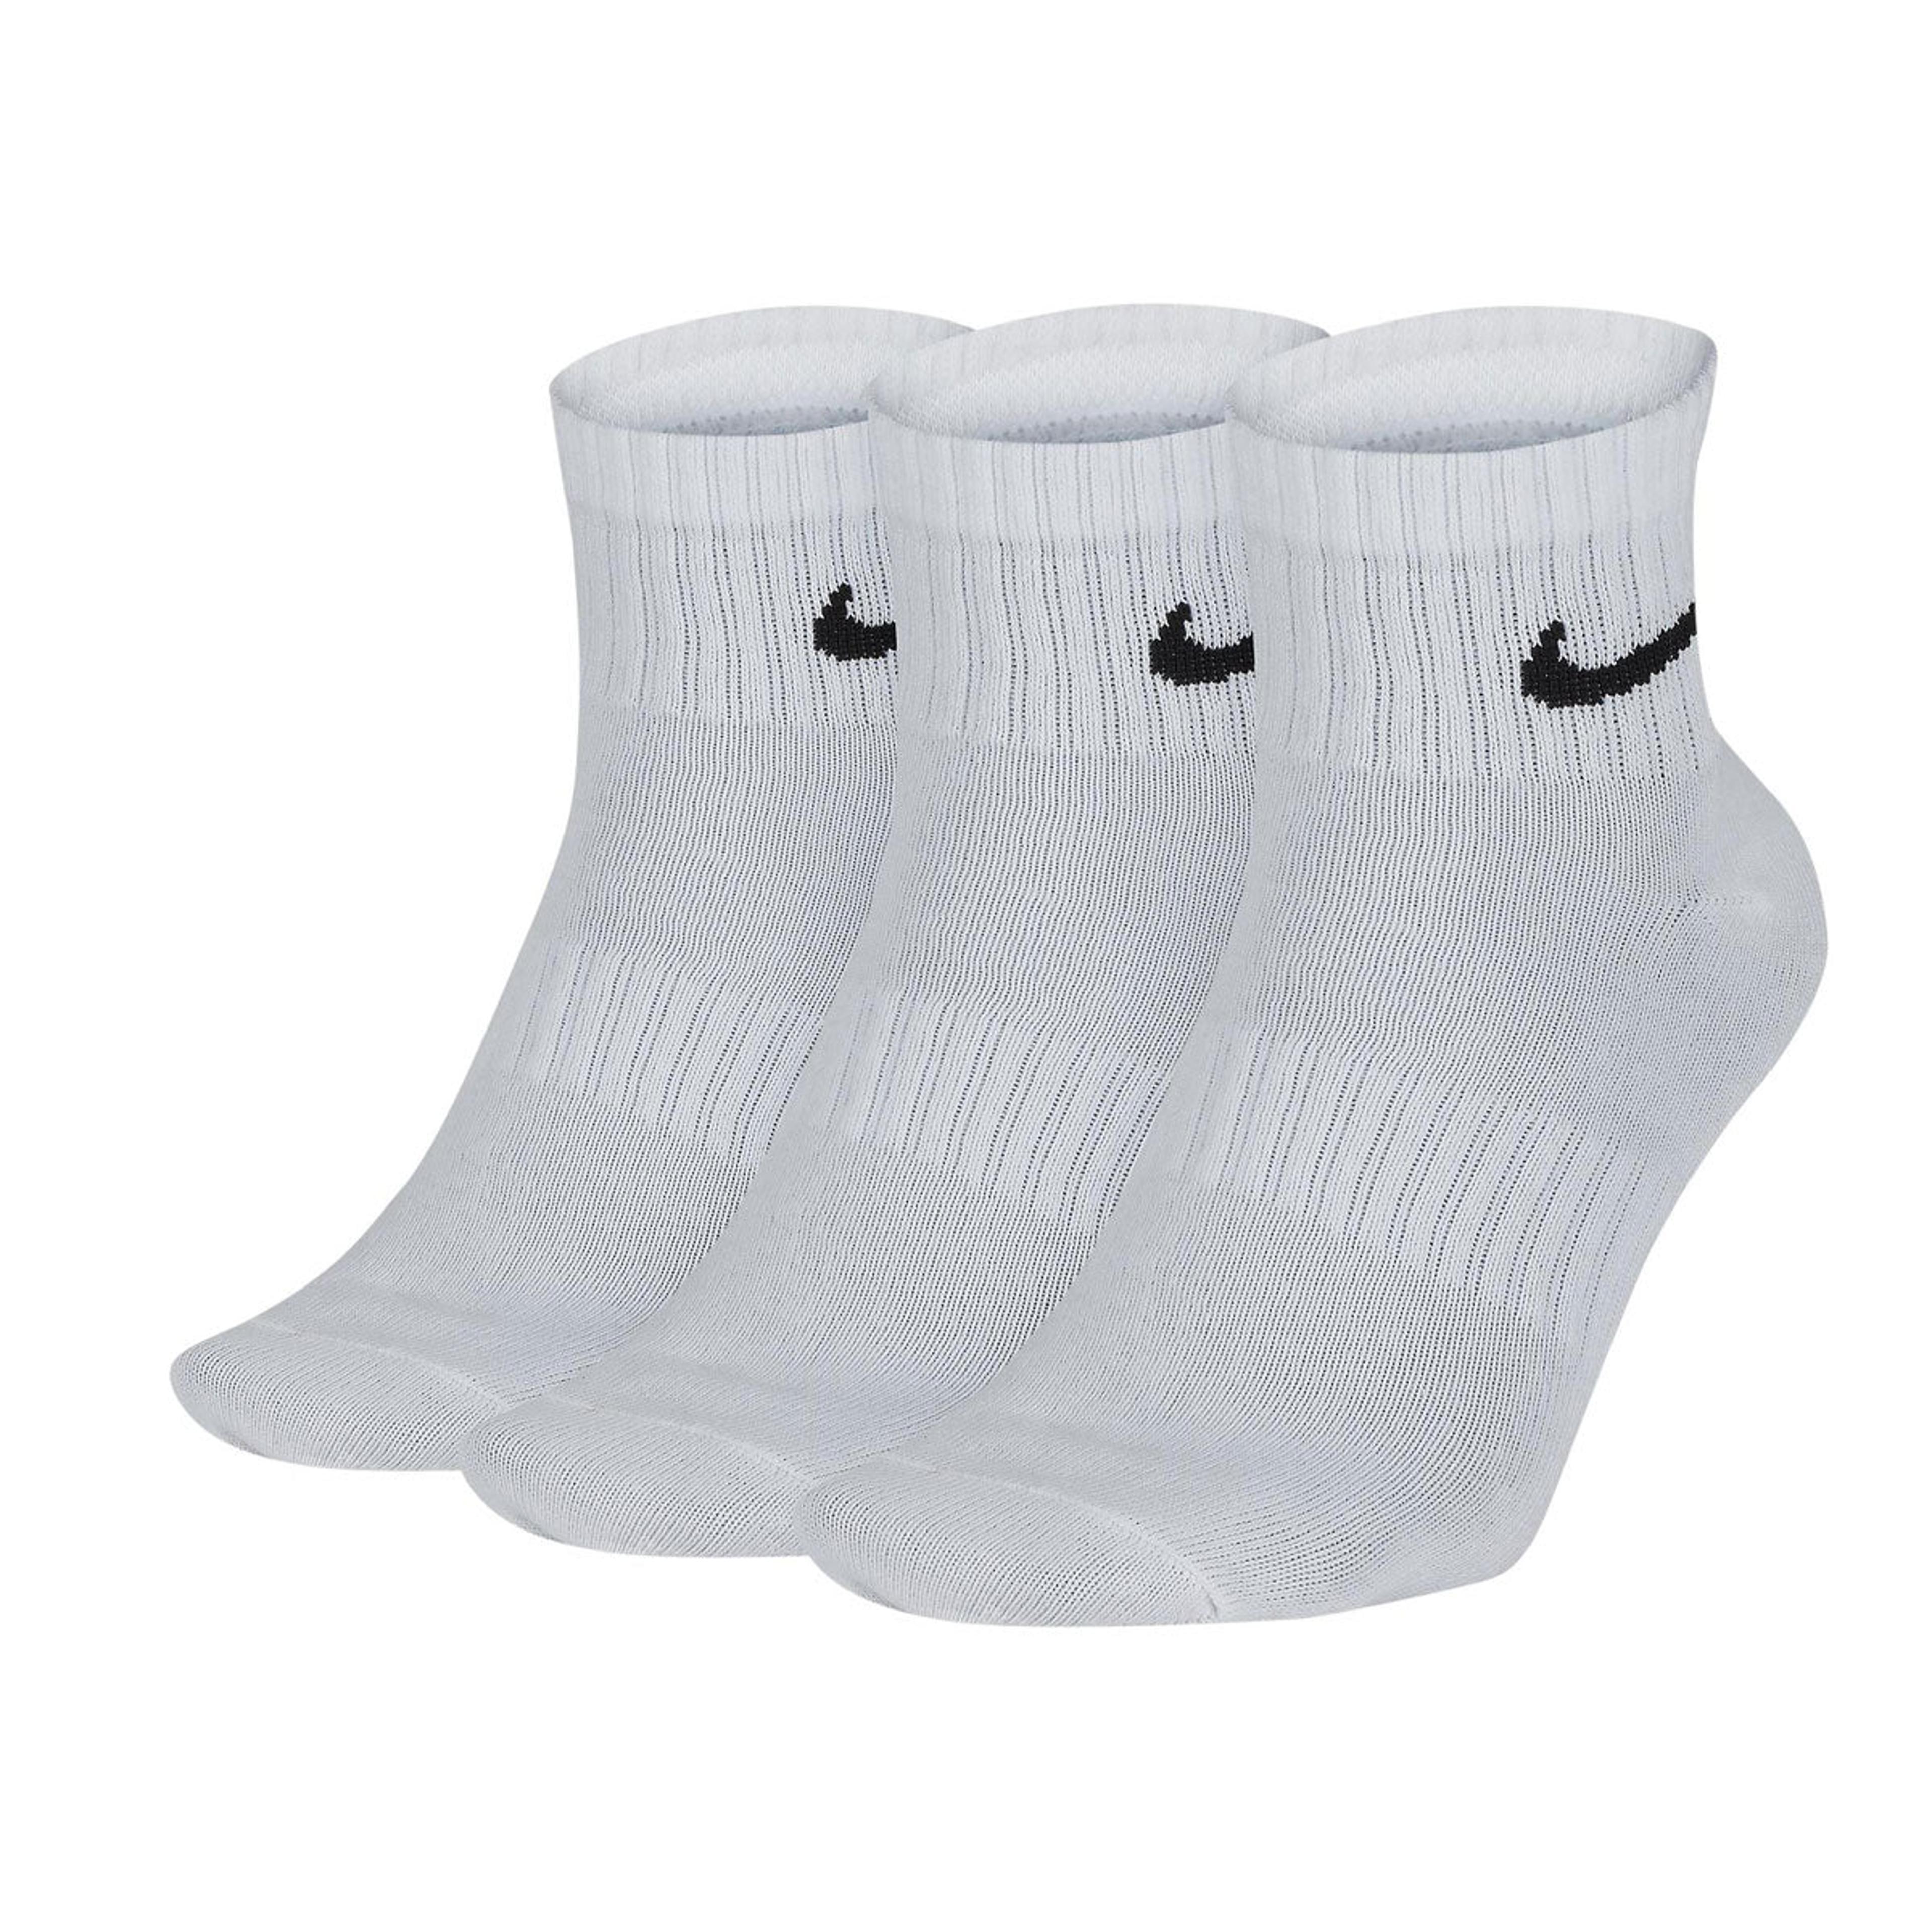 Alternate View 2 of Nike Everyday Lightweight Training Ankle Socks (3 Pairs)